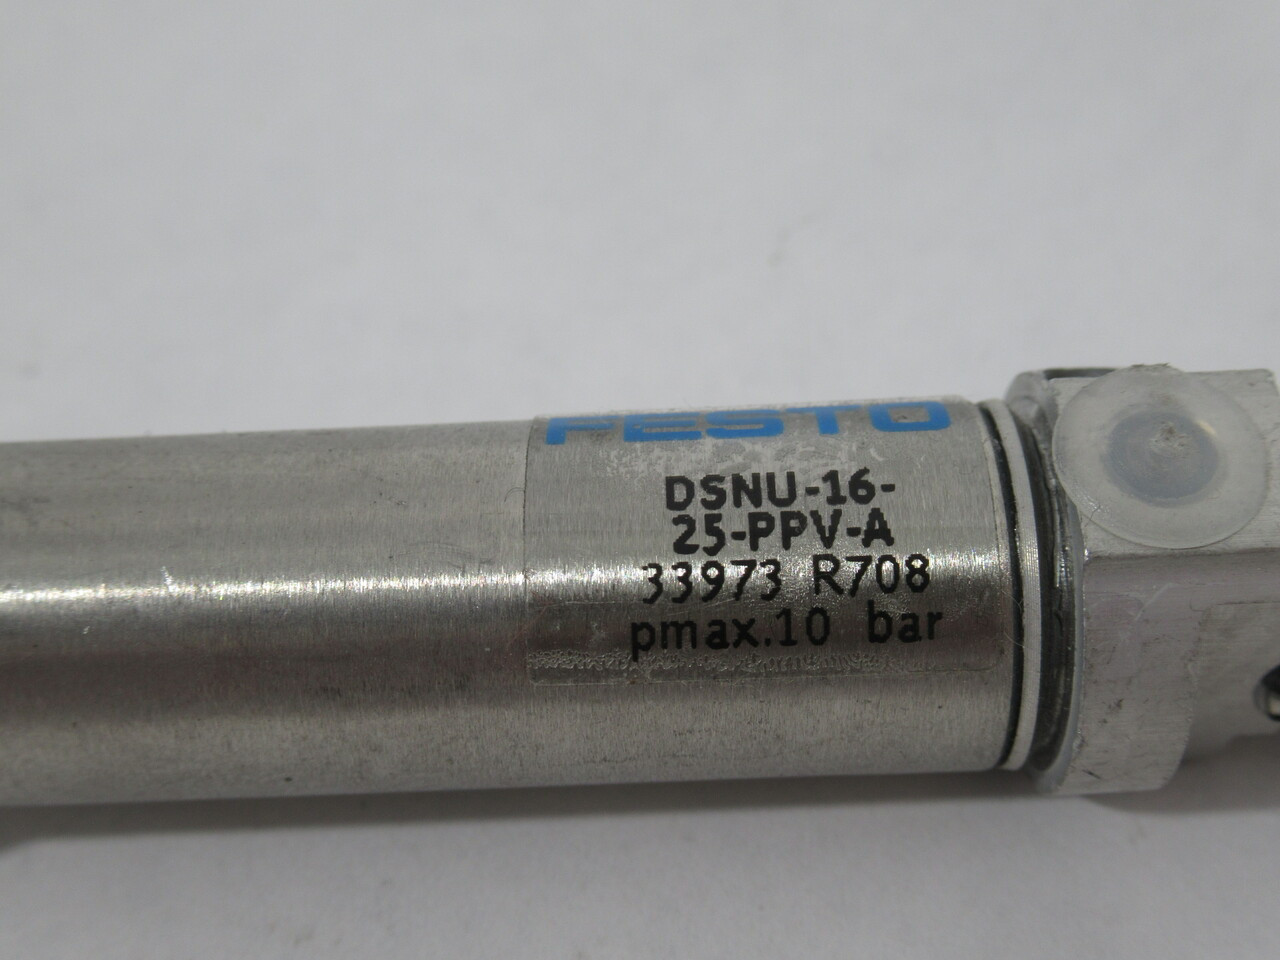 Festo 33973 DSNU-16-25-PPV-A Pneumatic Cylinder 16mm Bore 25mm Stroke NOP